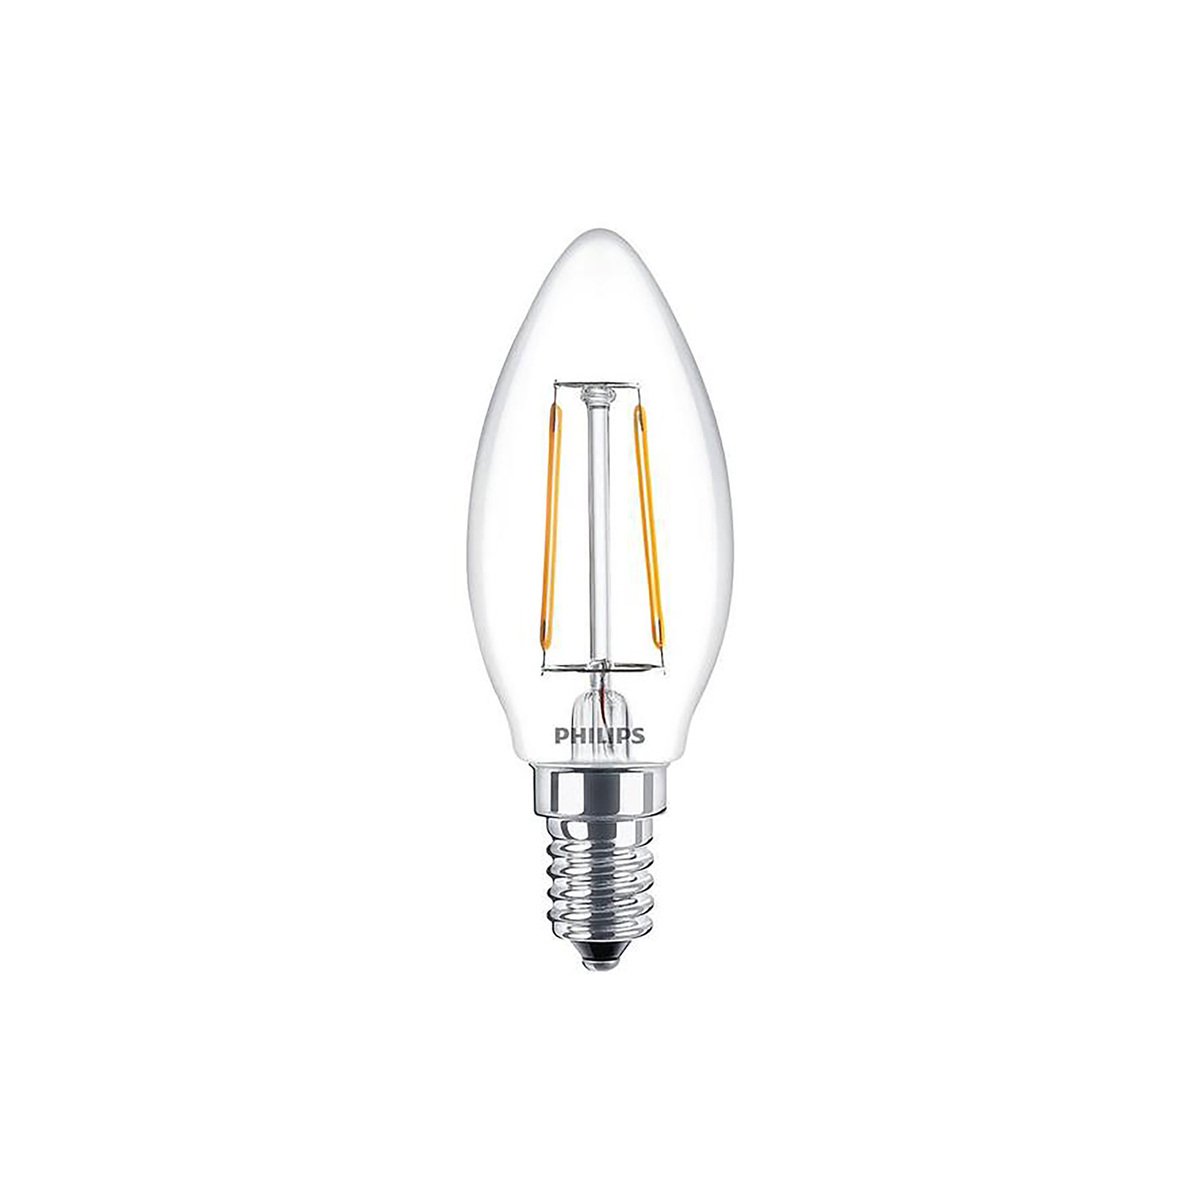 Philips LED Candle Bulb Classic 2W E14 830 Warm White